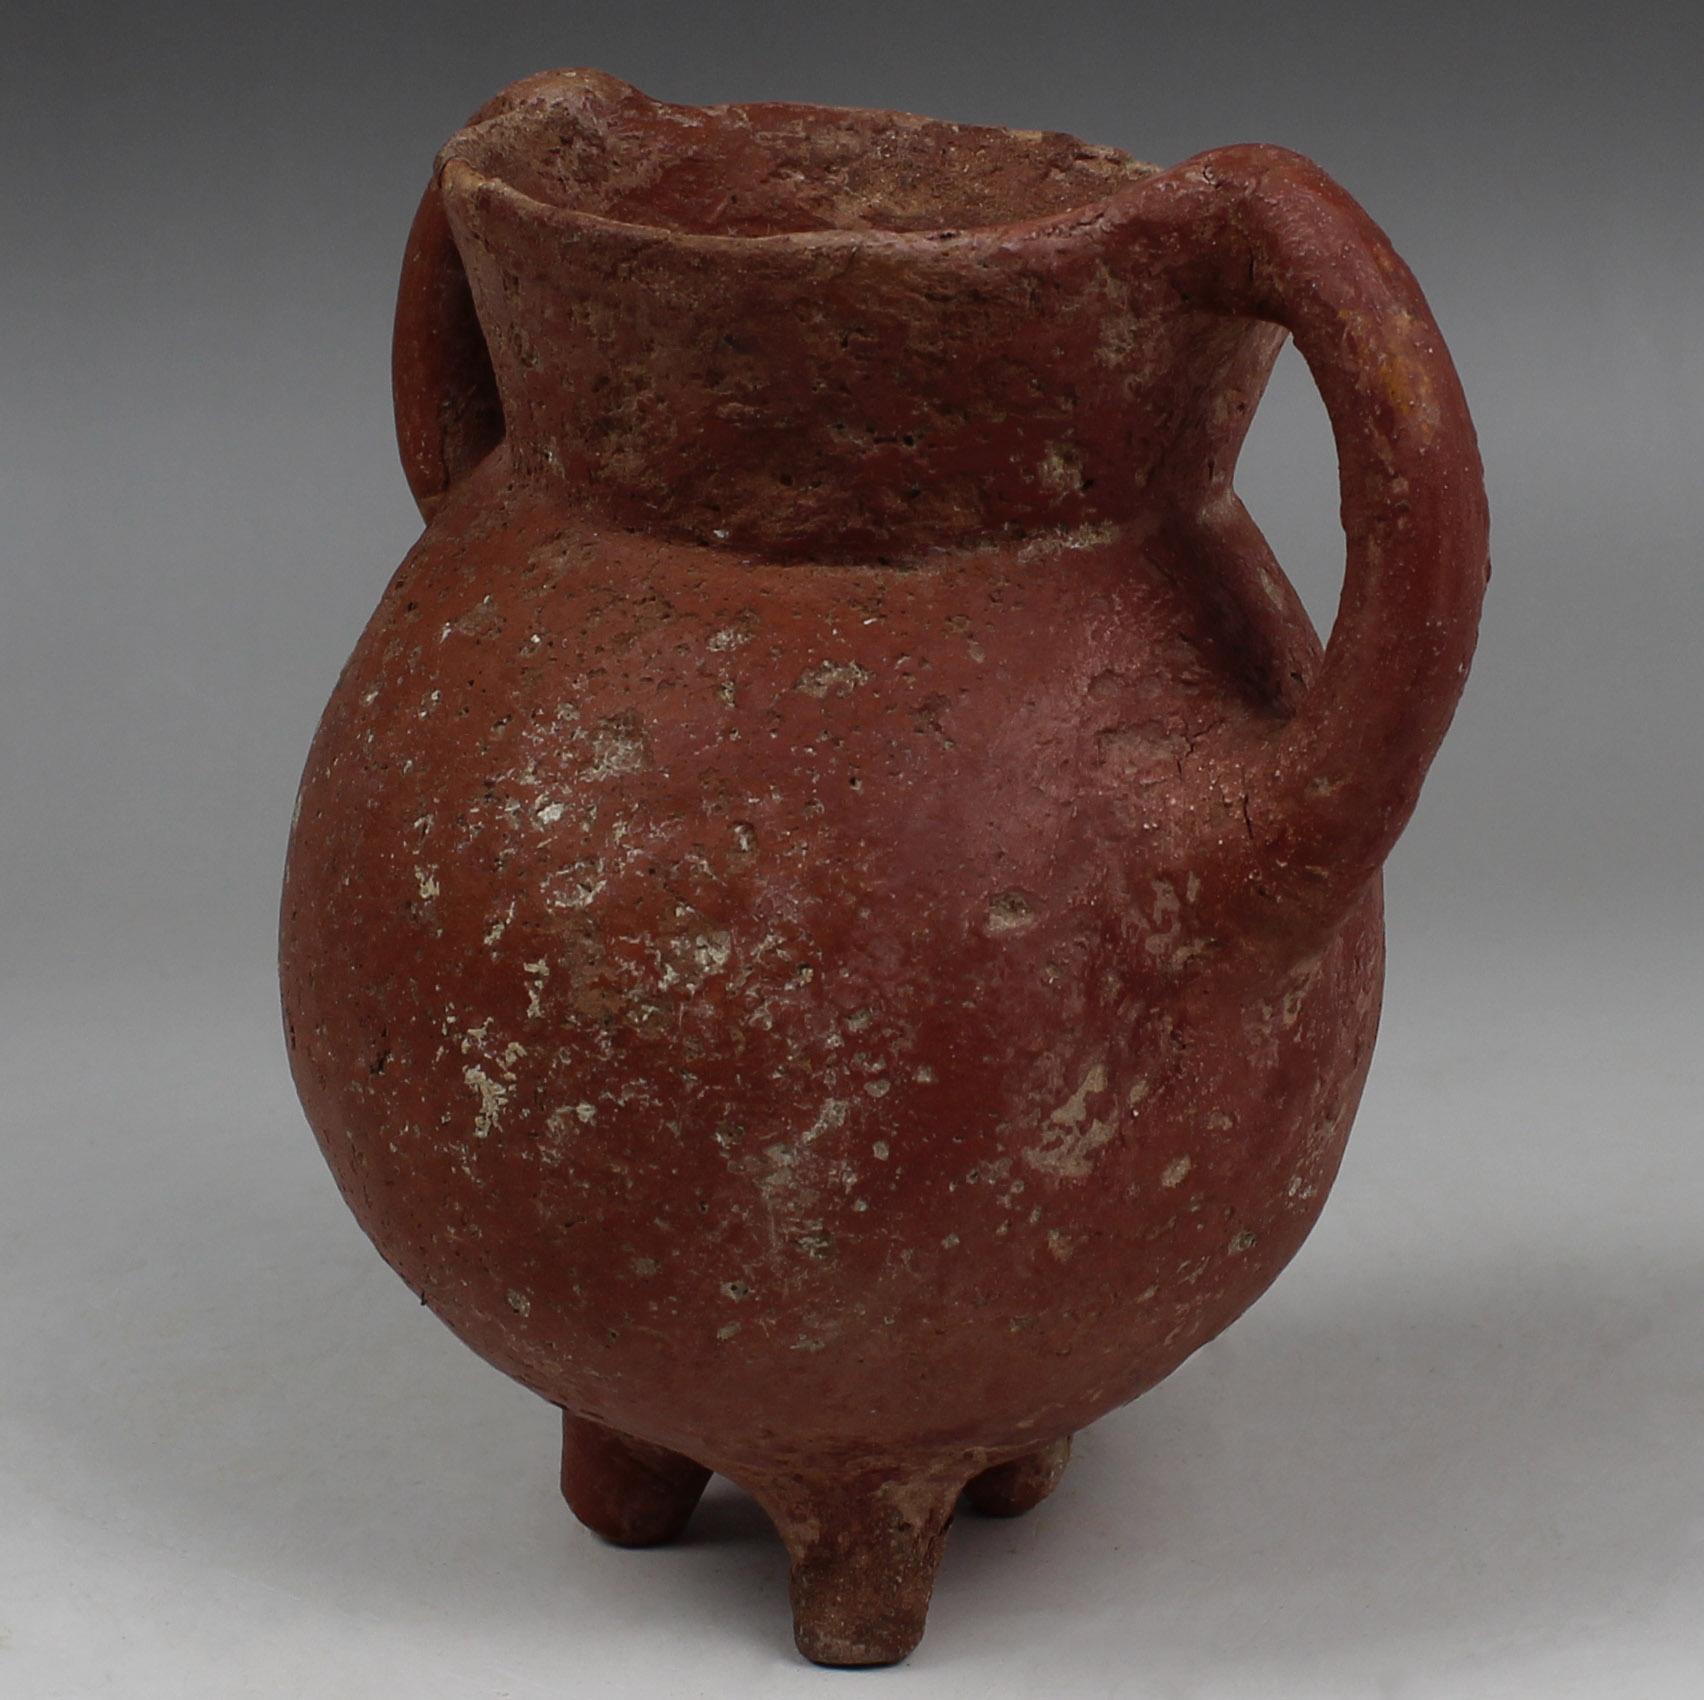 Prehistoric Bronze Age tripod cooking pot